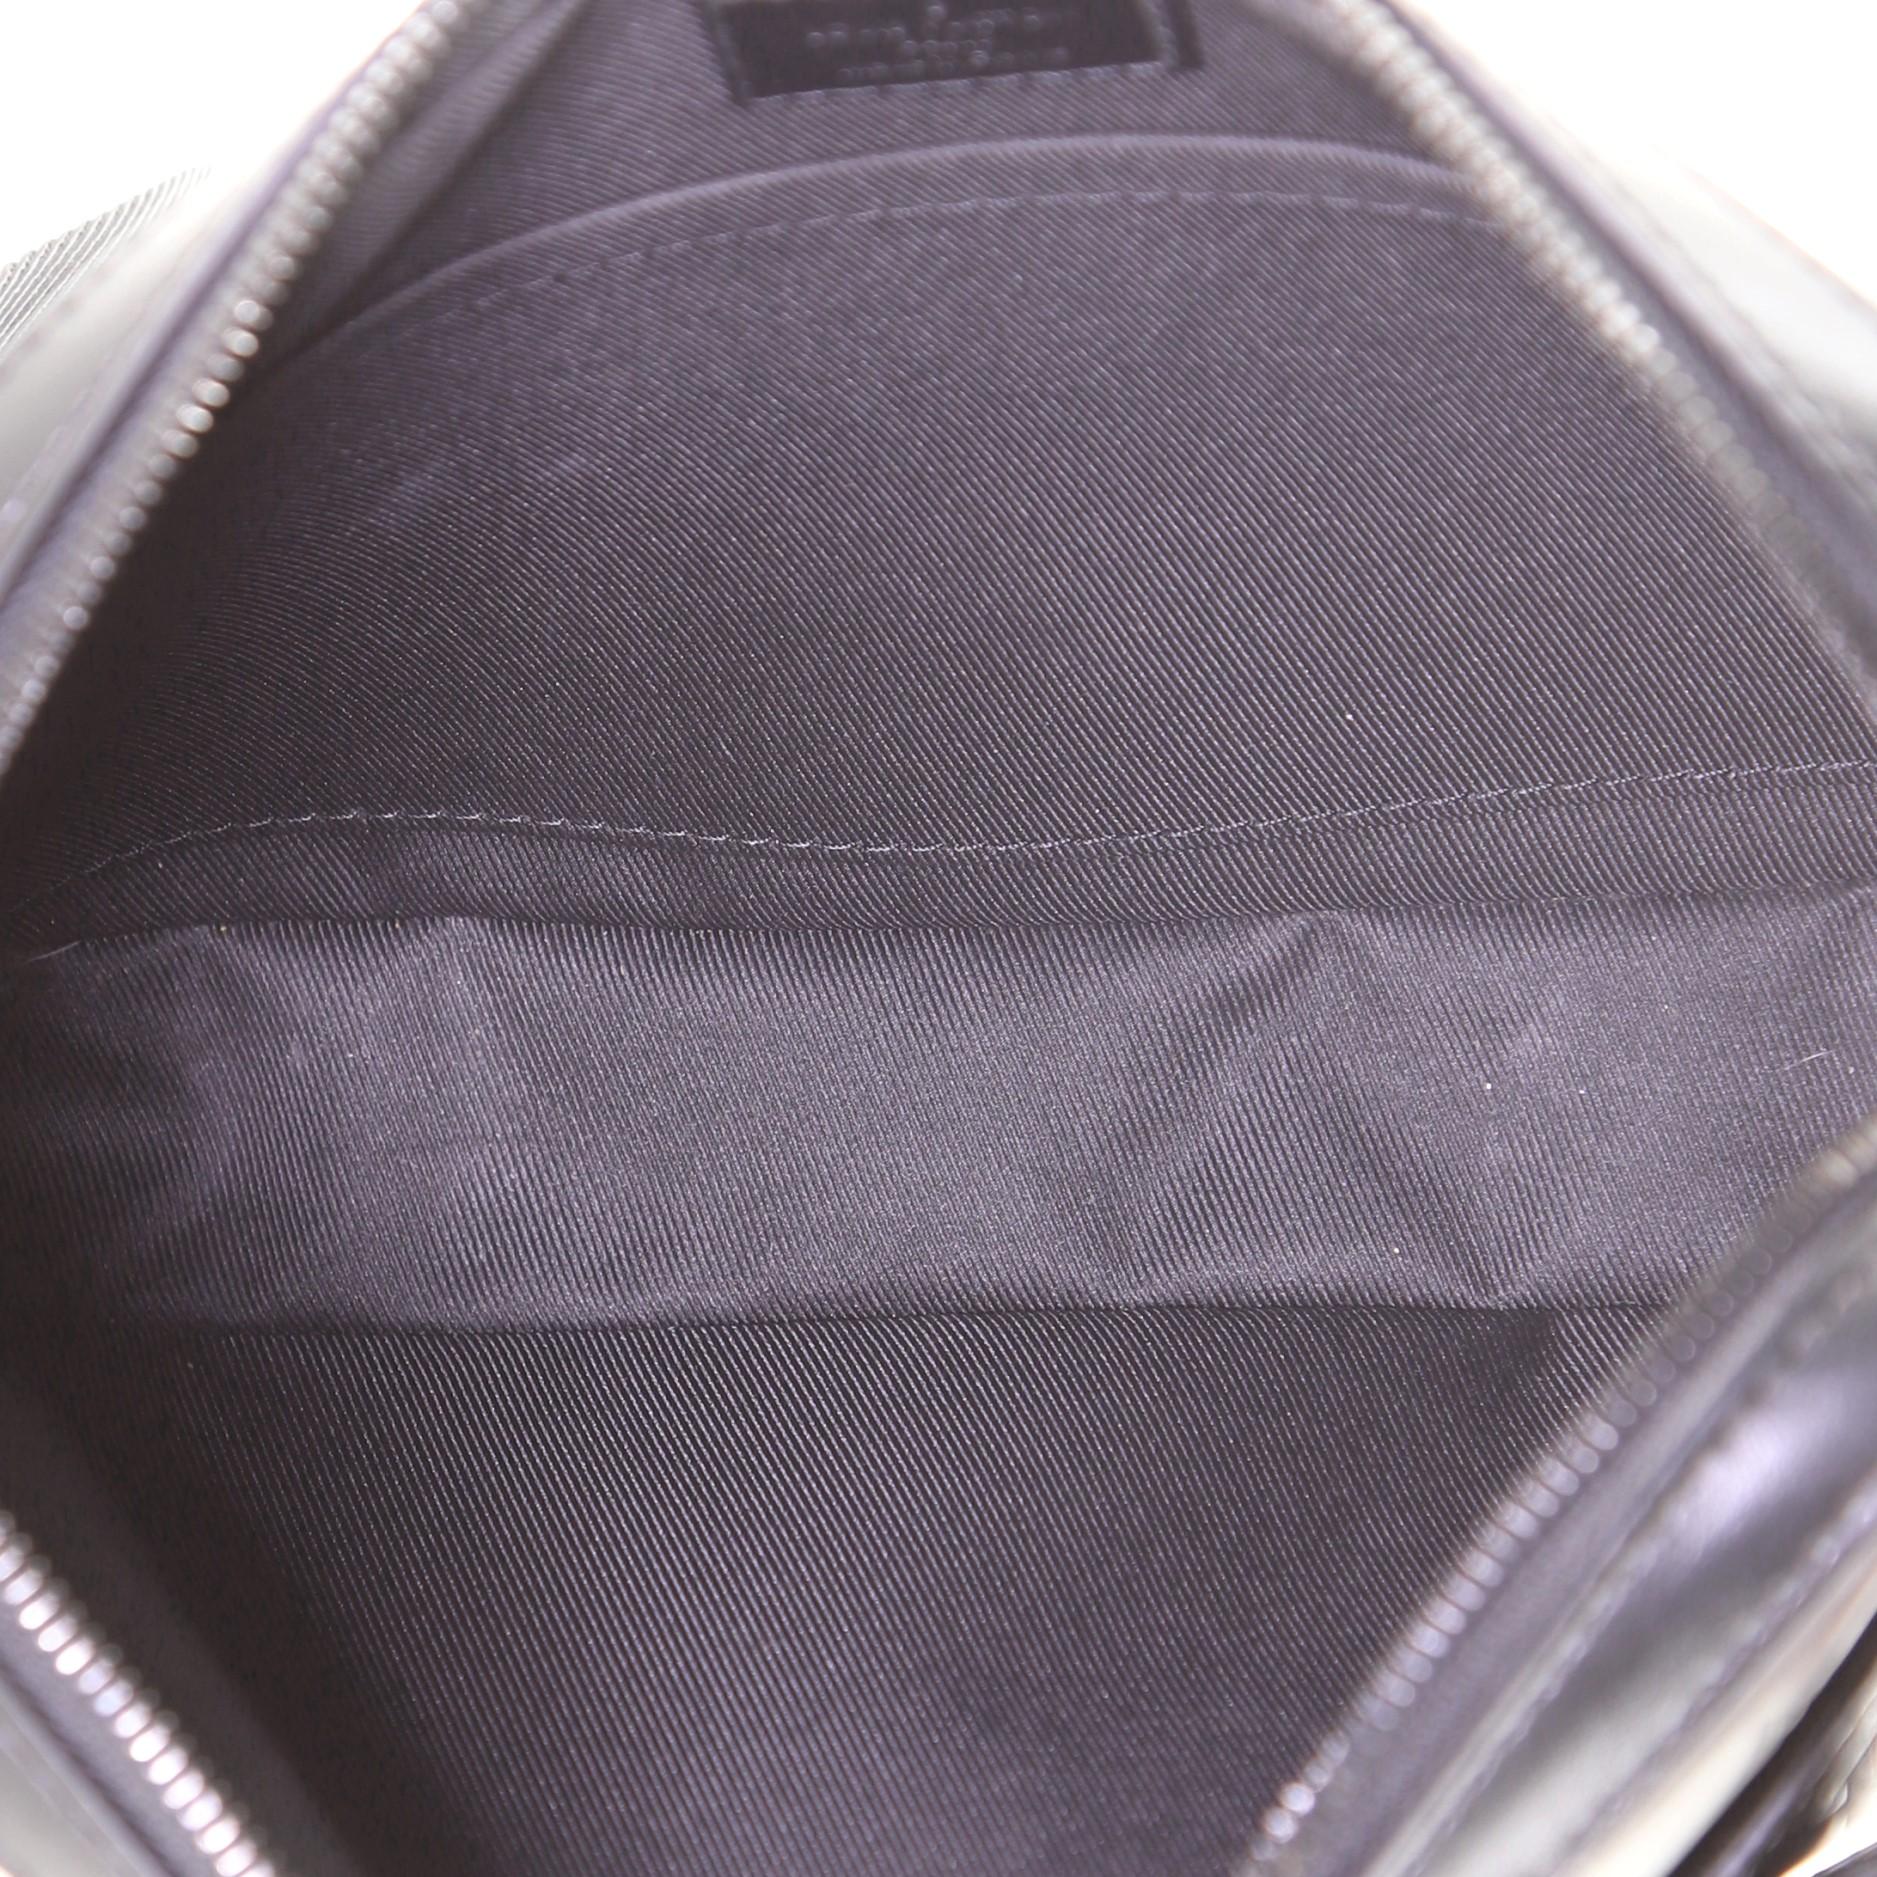 Black Louis Vuitton Duo Messenger Bag Monogram Shadow Leather